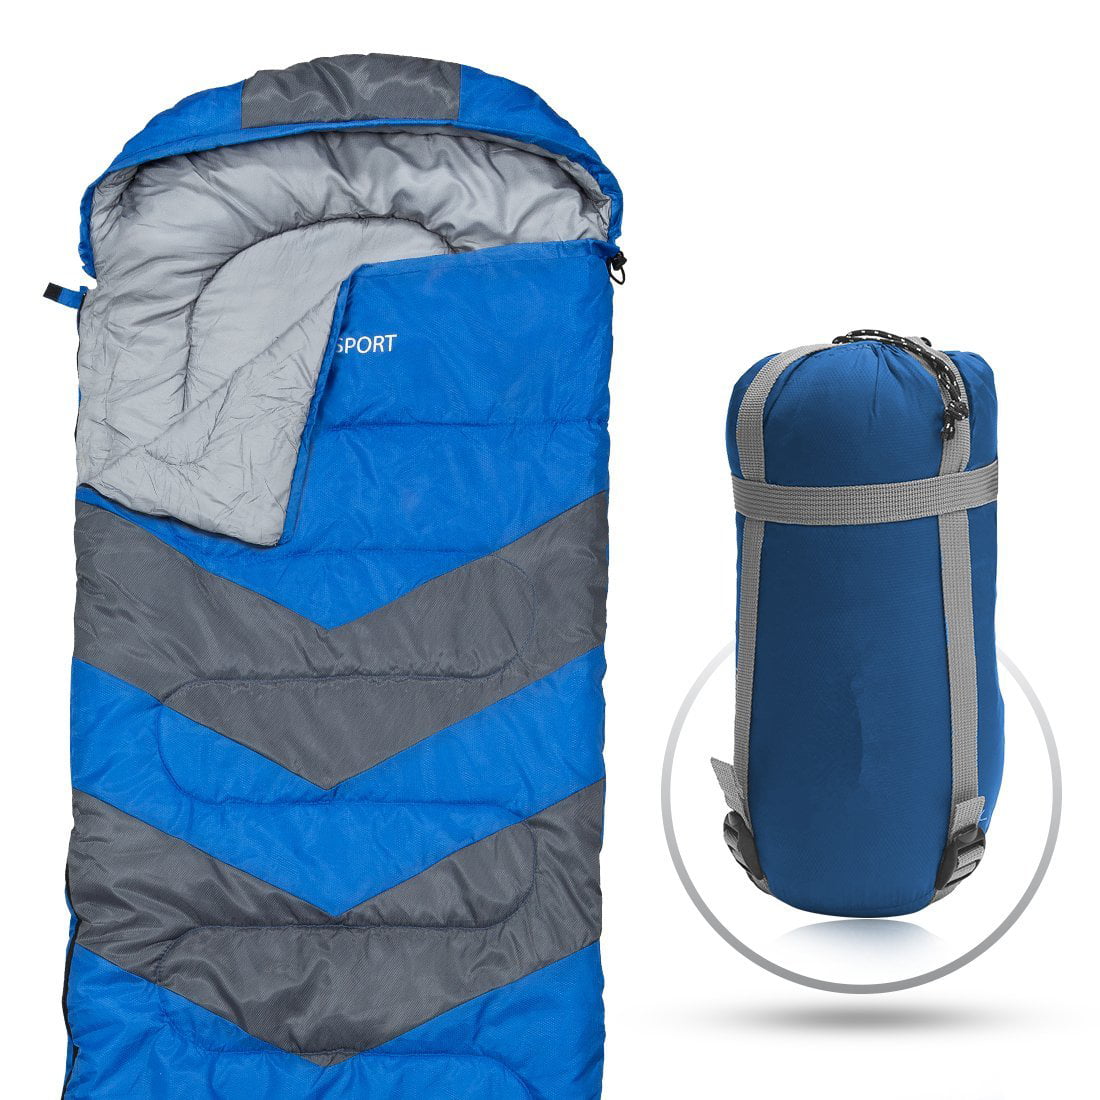 OutdoorsTravel Sheet Sleep Sack Lightweight Compact Portable Sleepsack for Hotel Picnic Camping Hiking Backpacking Aosiyp Sleeping Bag 